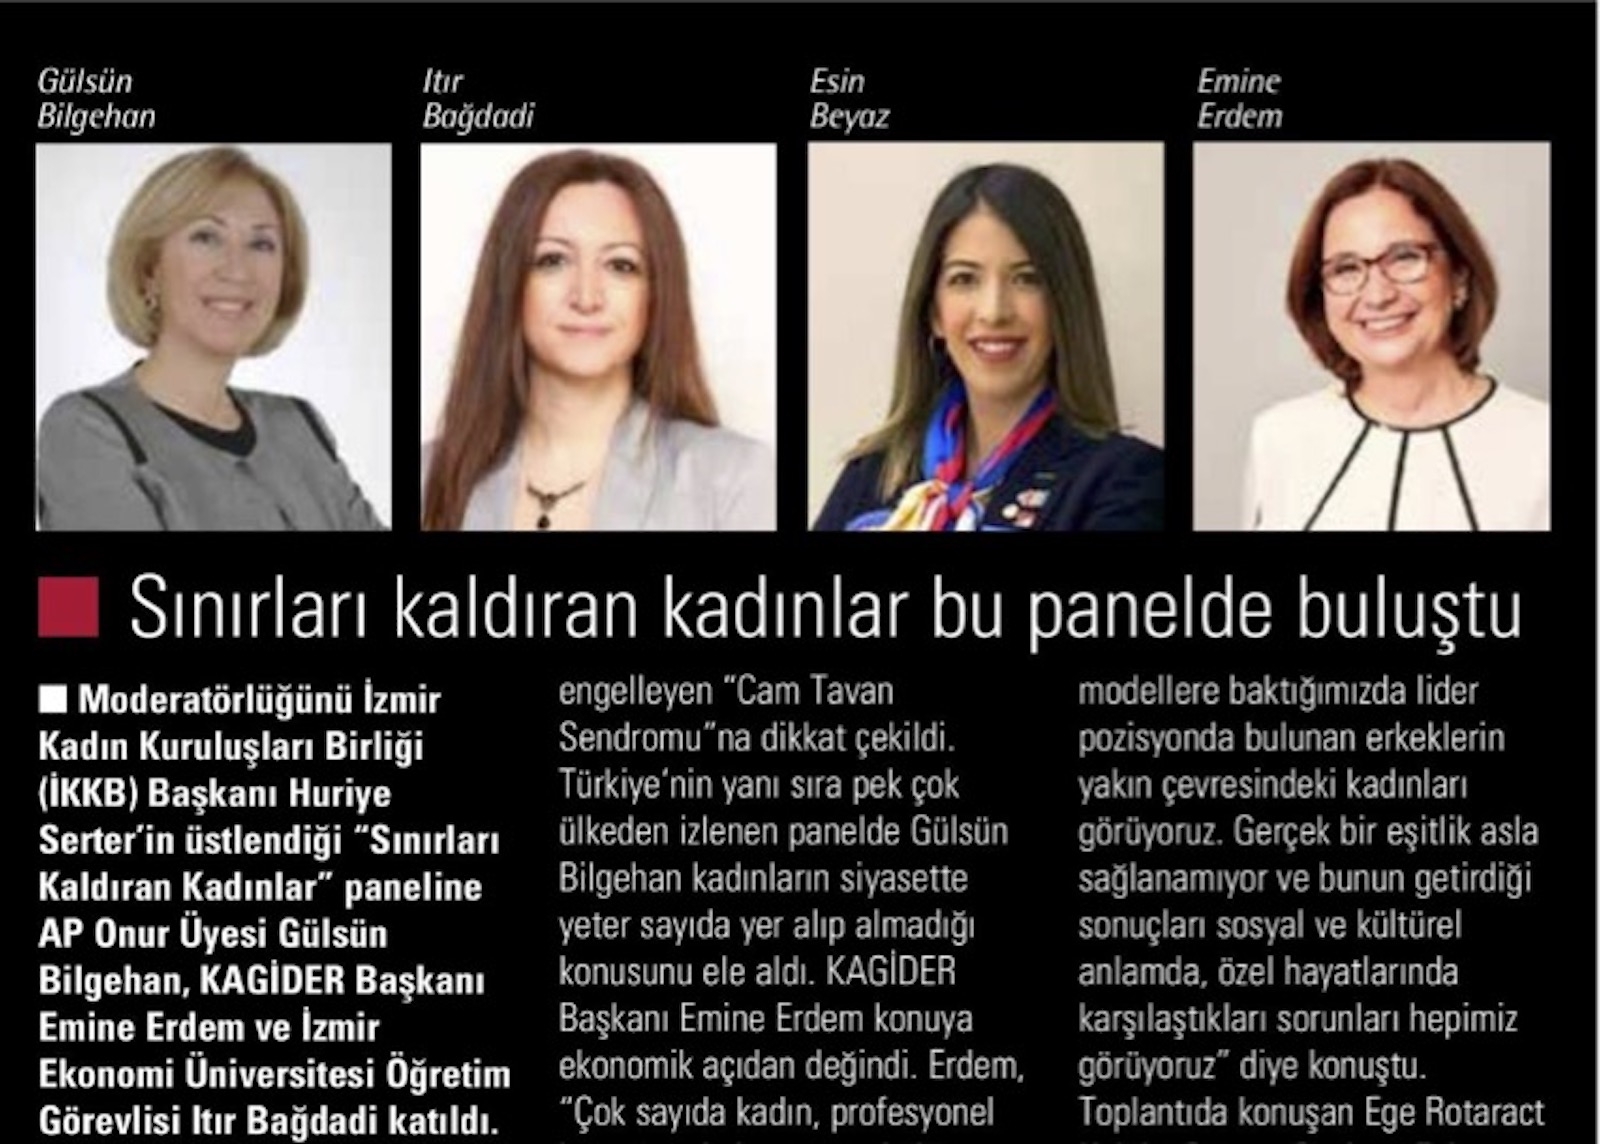 Itır Bağdadi participated in the panel “Women Lifting Borders”